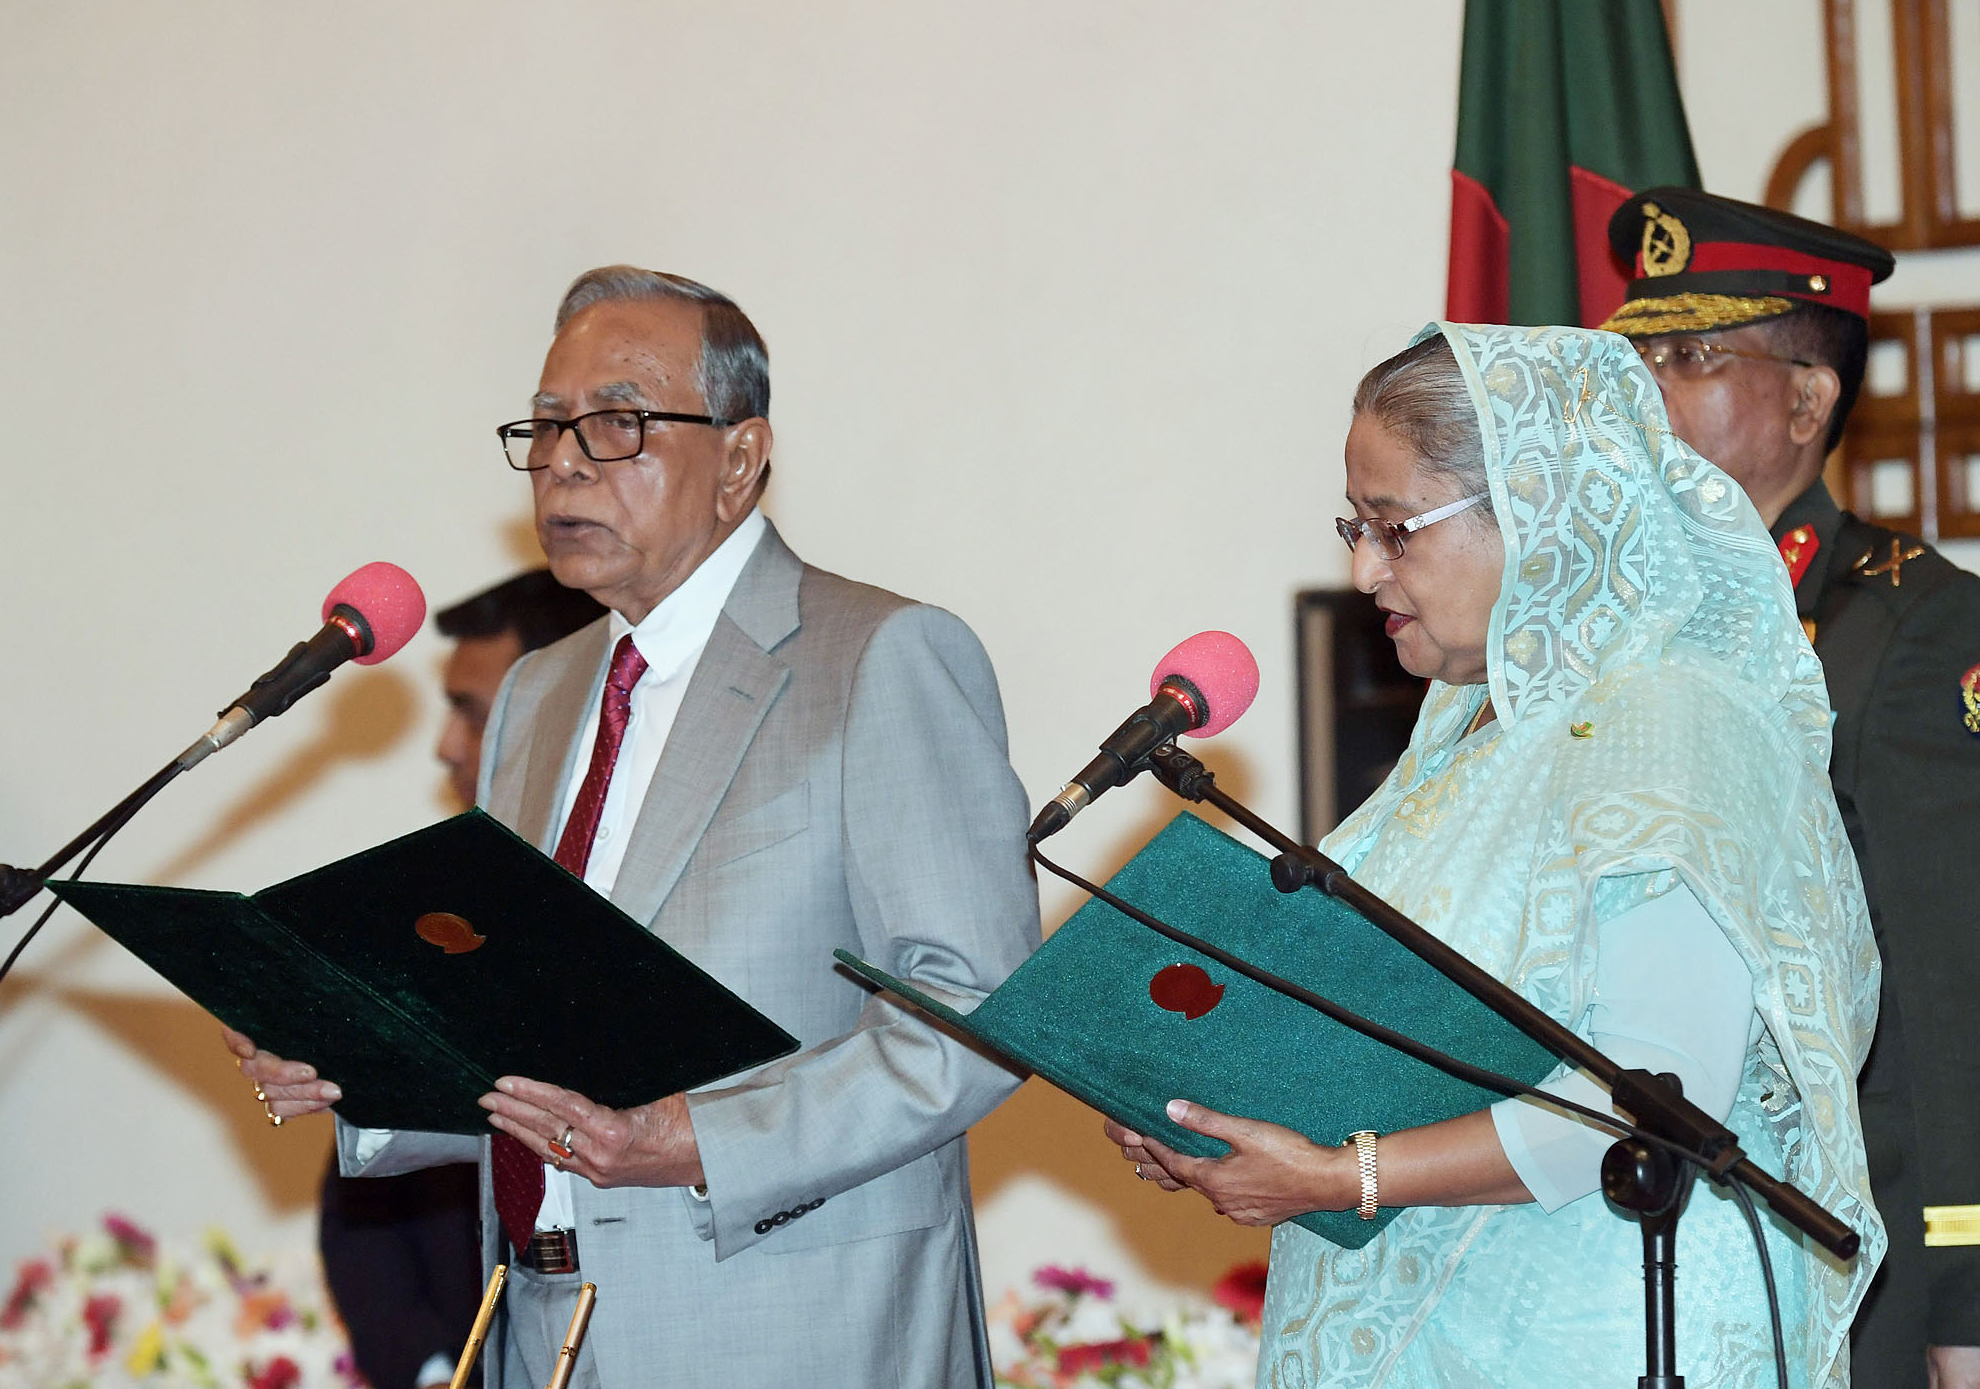 Sheikh Hasina takes oath as Bangladesh PM for fourth time